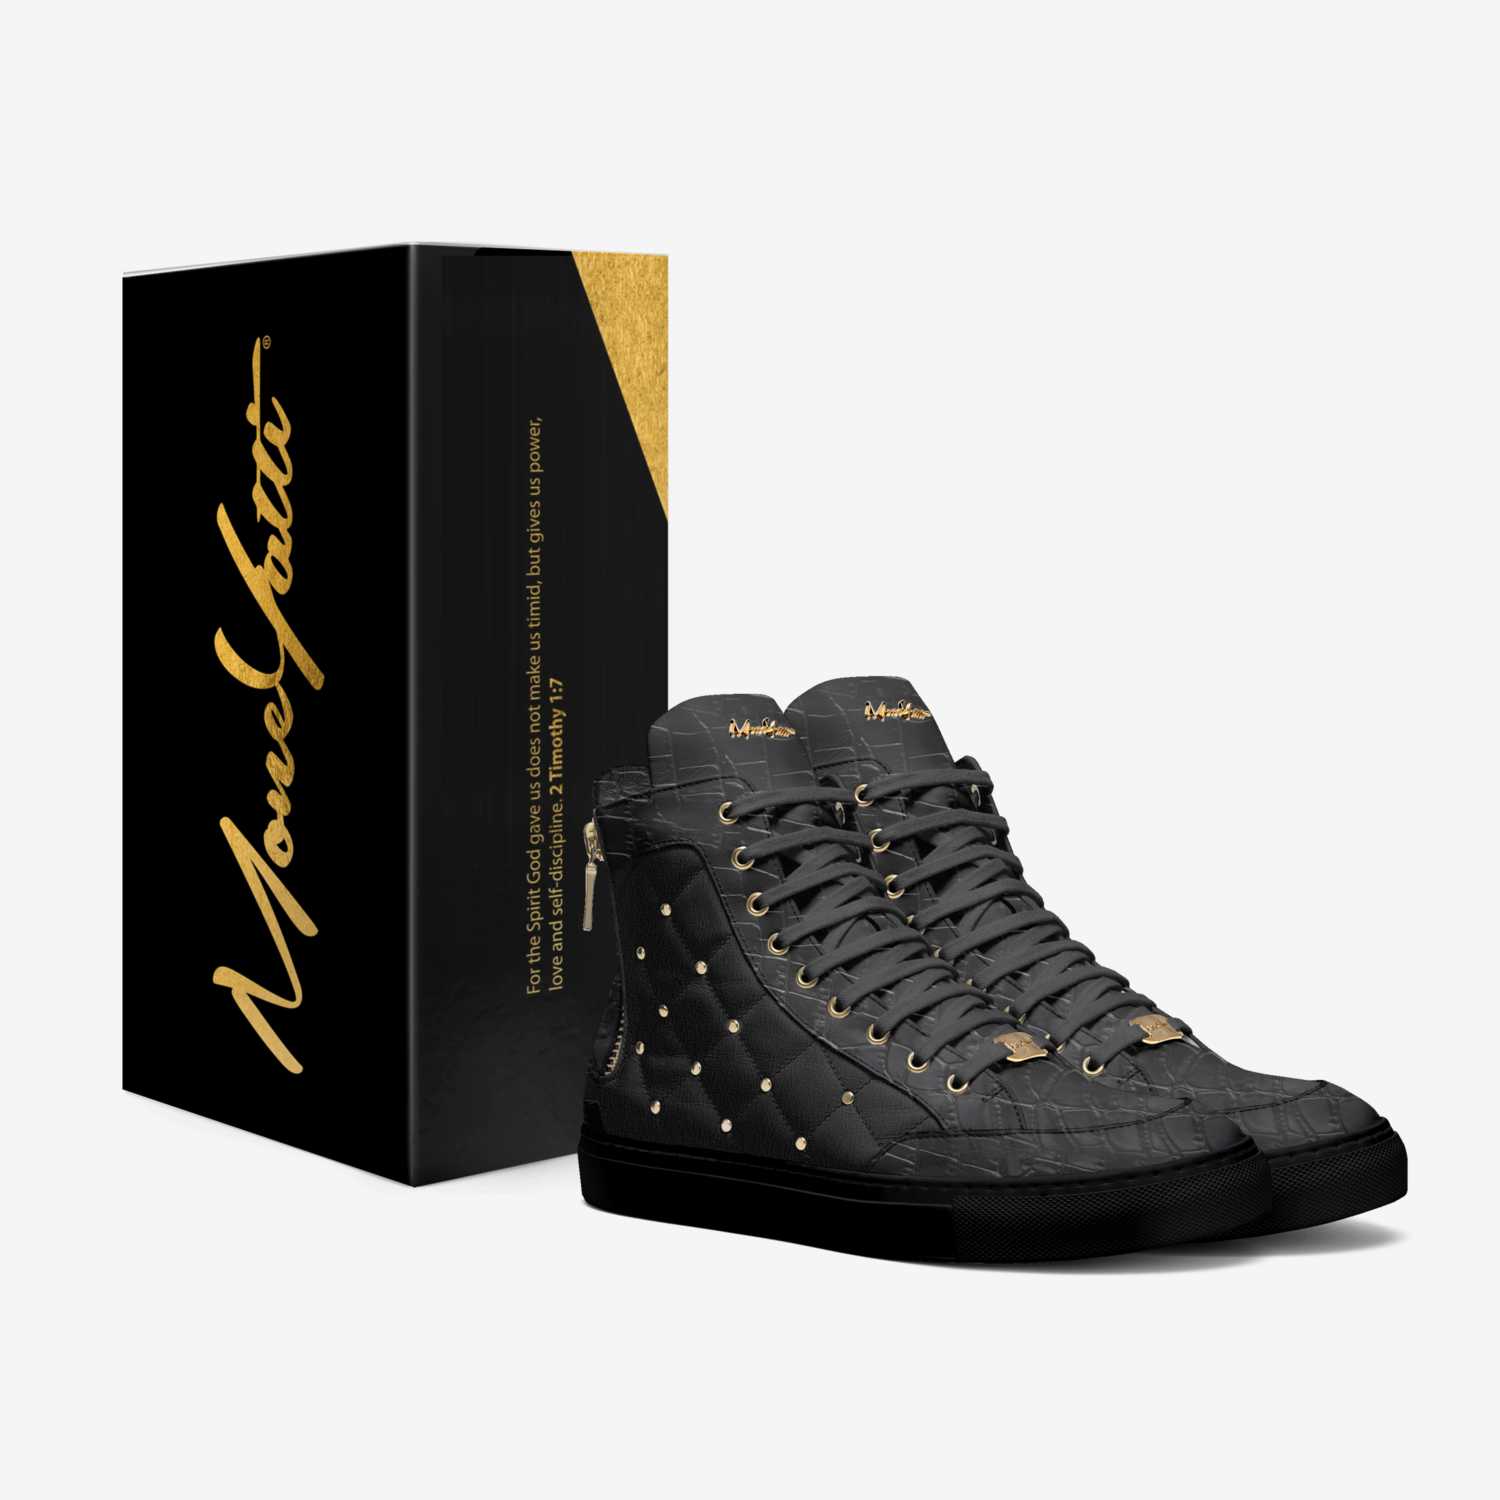 Moneyatti LTD04 custom made in Italy shoes by Moneyatti Brand | Box view